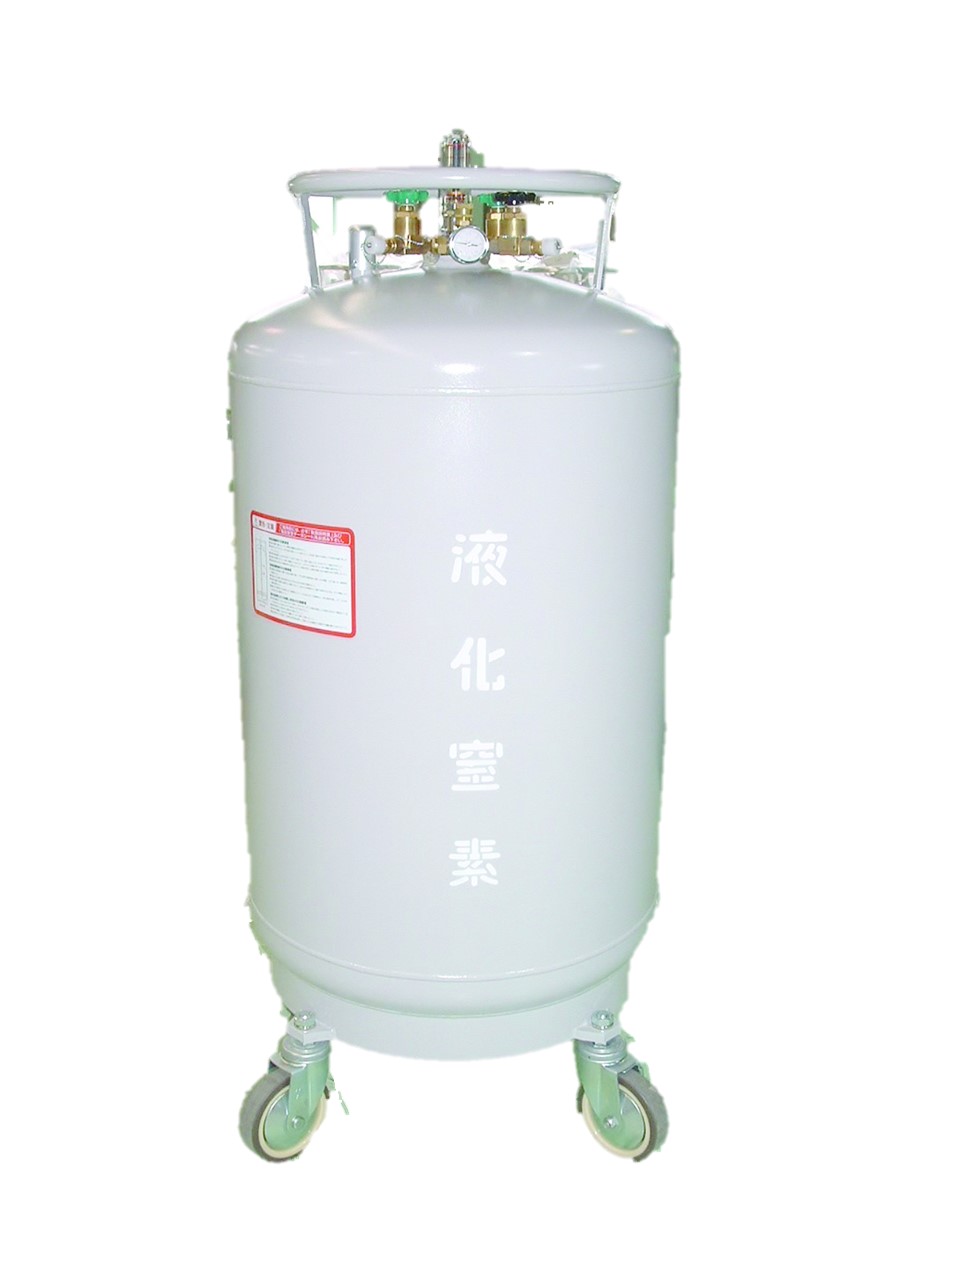 可搬式液体窒素容器DLS-Bシリーズ